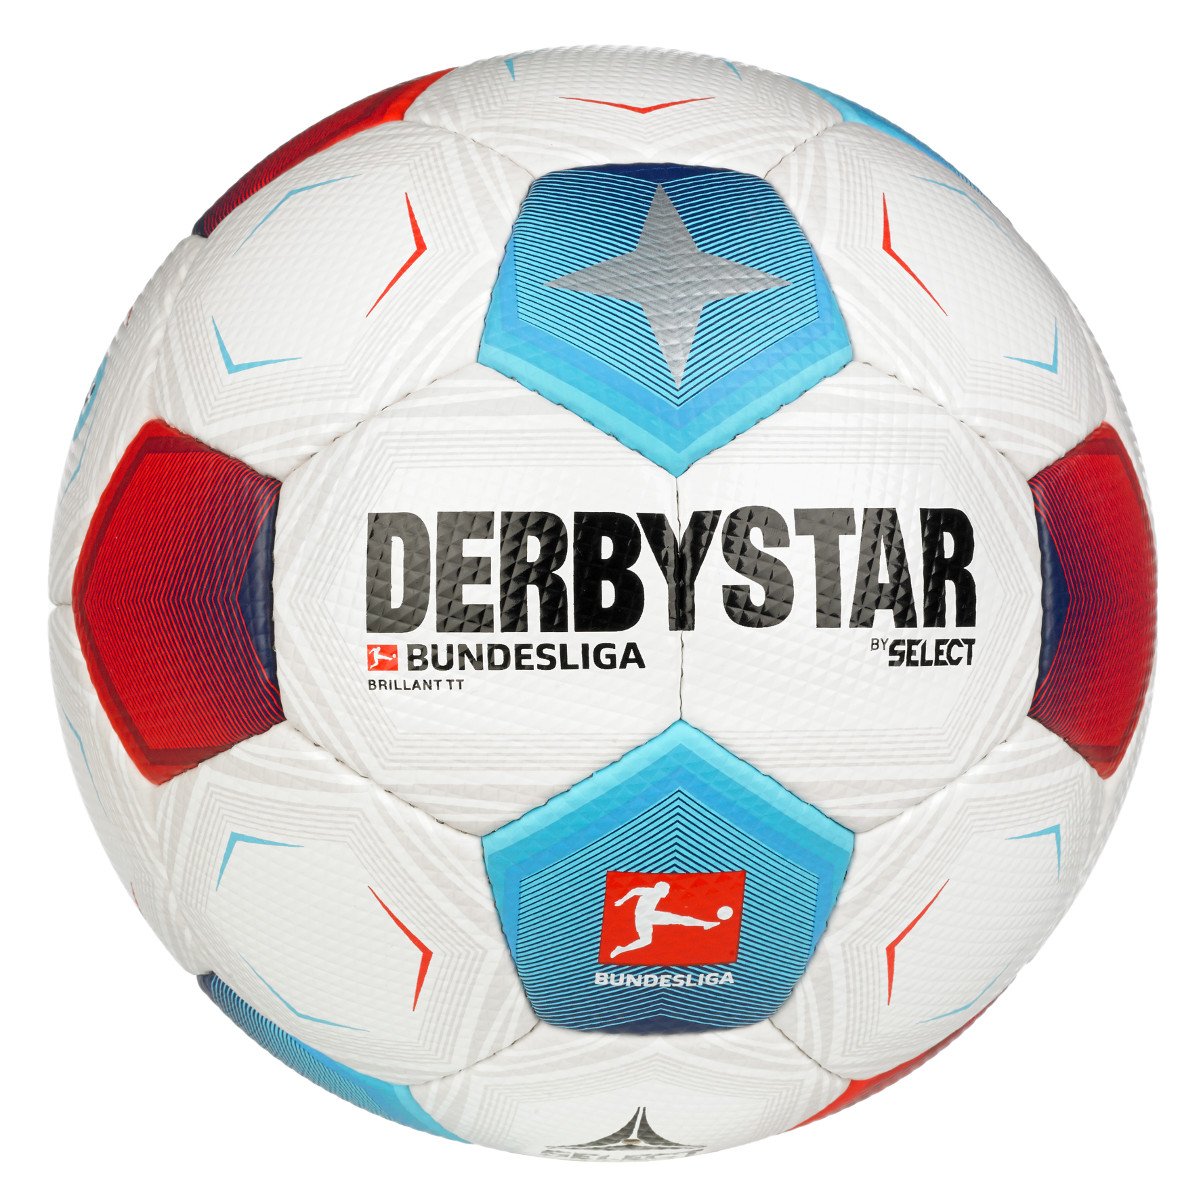 Derbystar Bundesliga Brillant TT v23 Fußball, weiß/rot/blau | Fußbälle